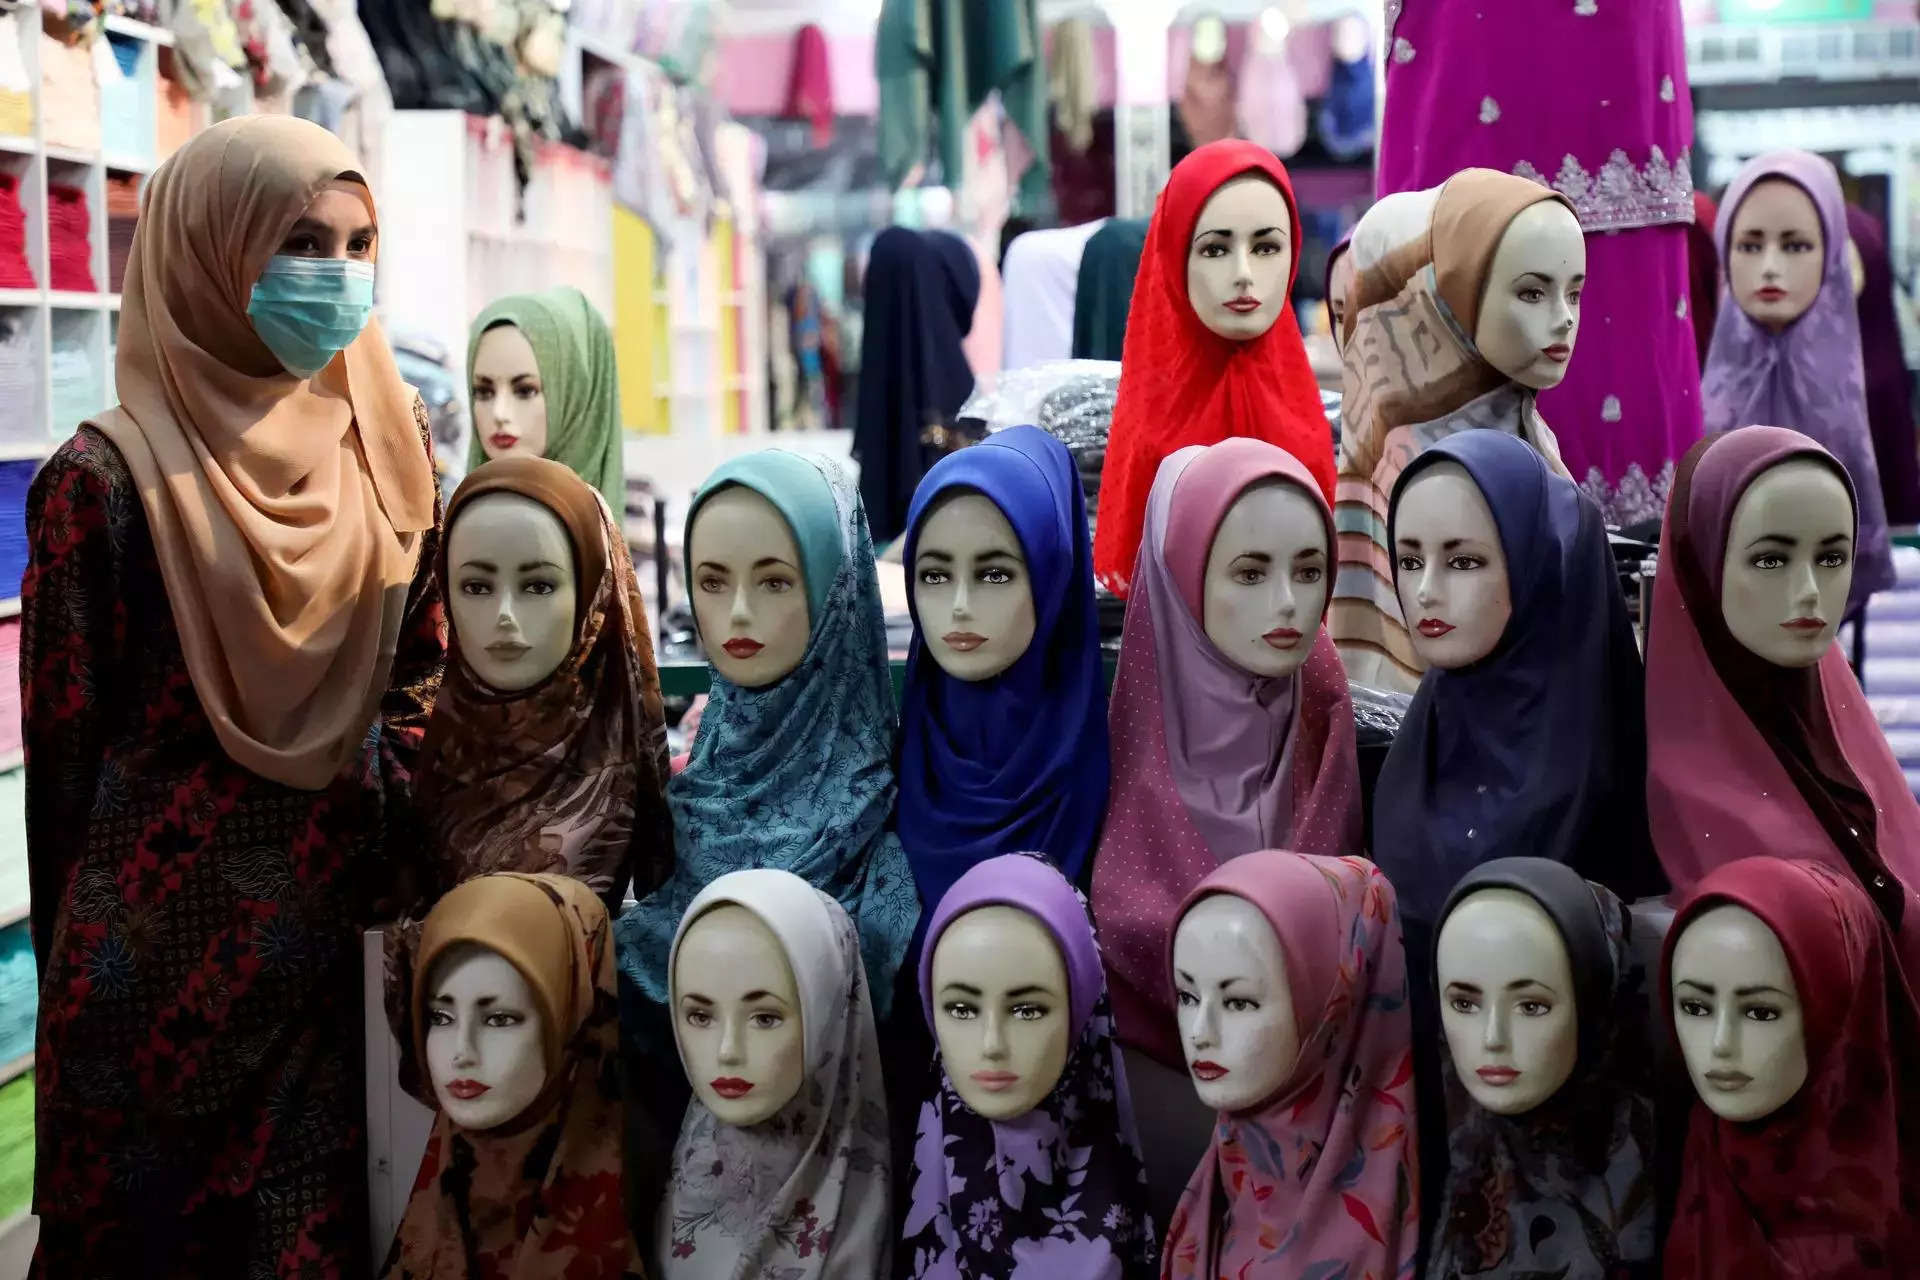 9. What top EU court said on Hijab